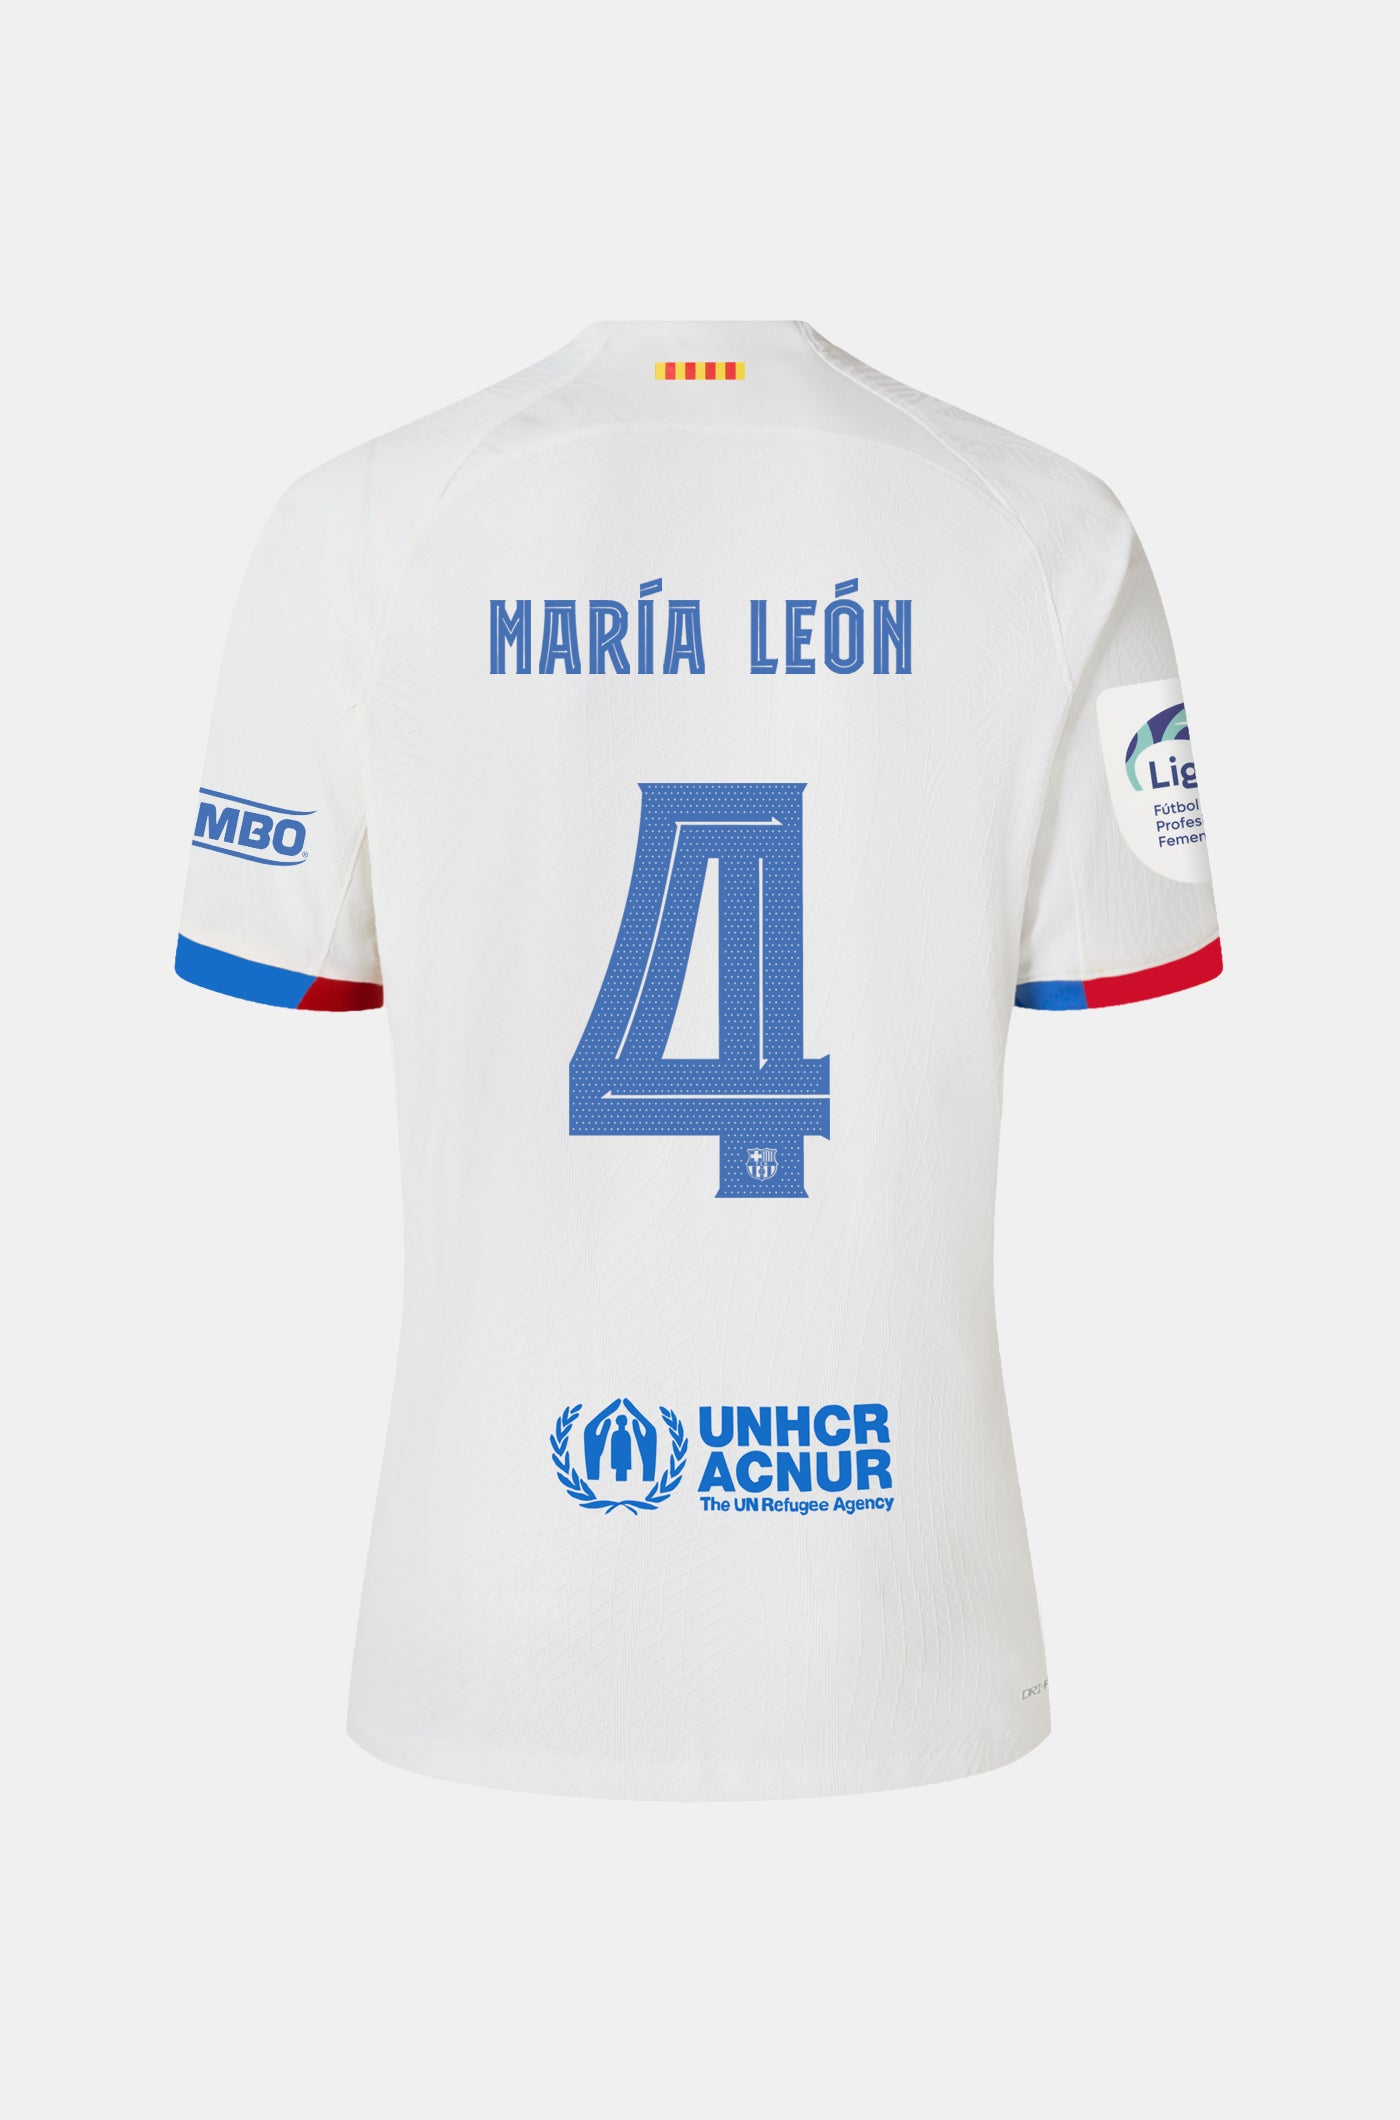 Liga F FC Barcelona away shirt 23/24 - Women  - MARÍA LEÓN